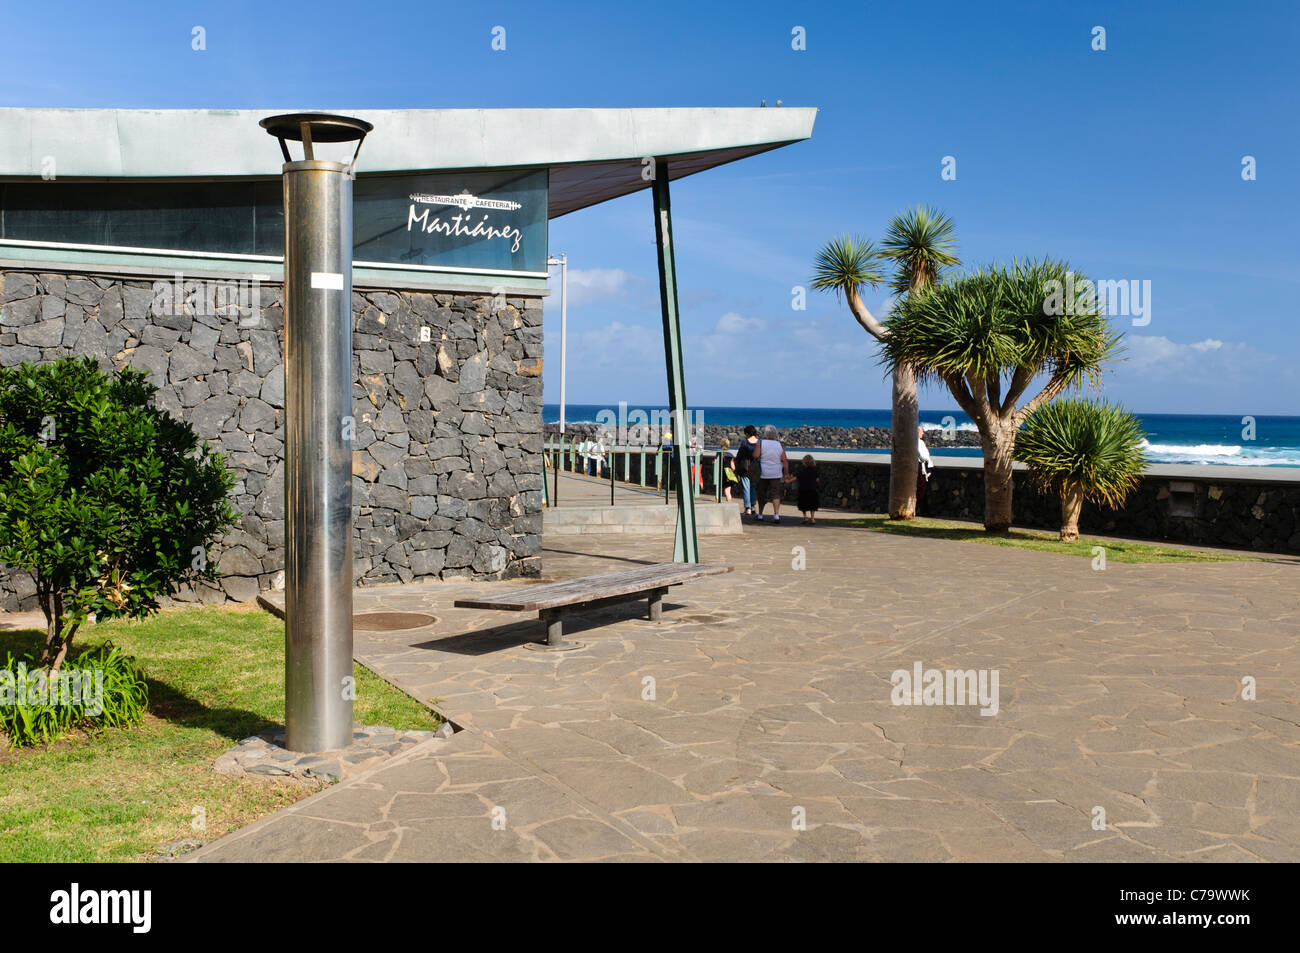 Playa Martianez, Puerto de la Cruz, Tenerife, Canaries, Espagne, Europe Banque D'Images